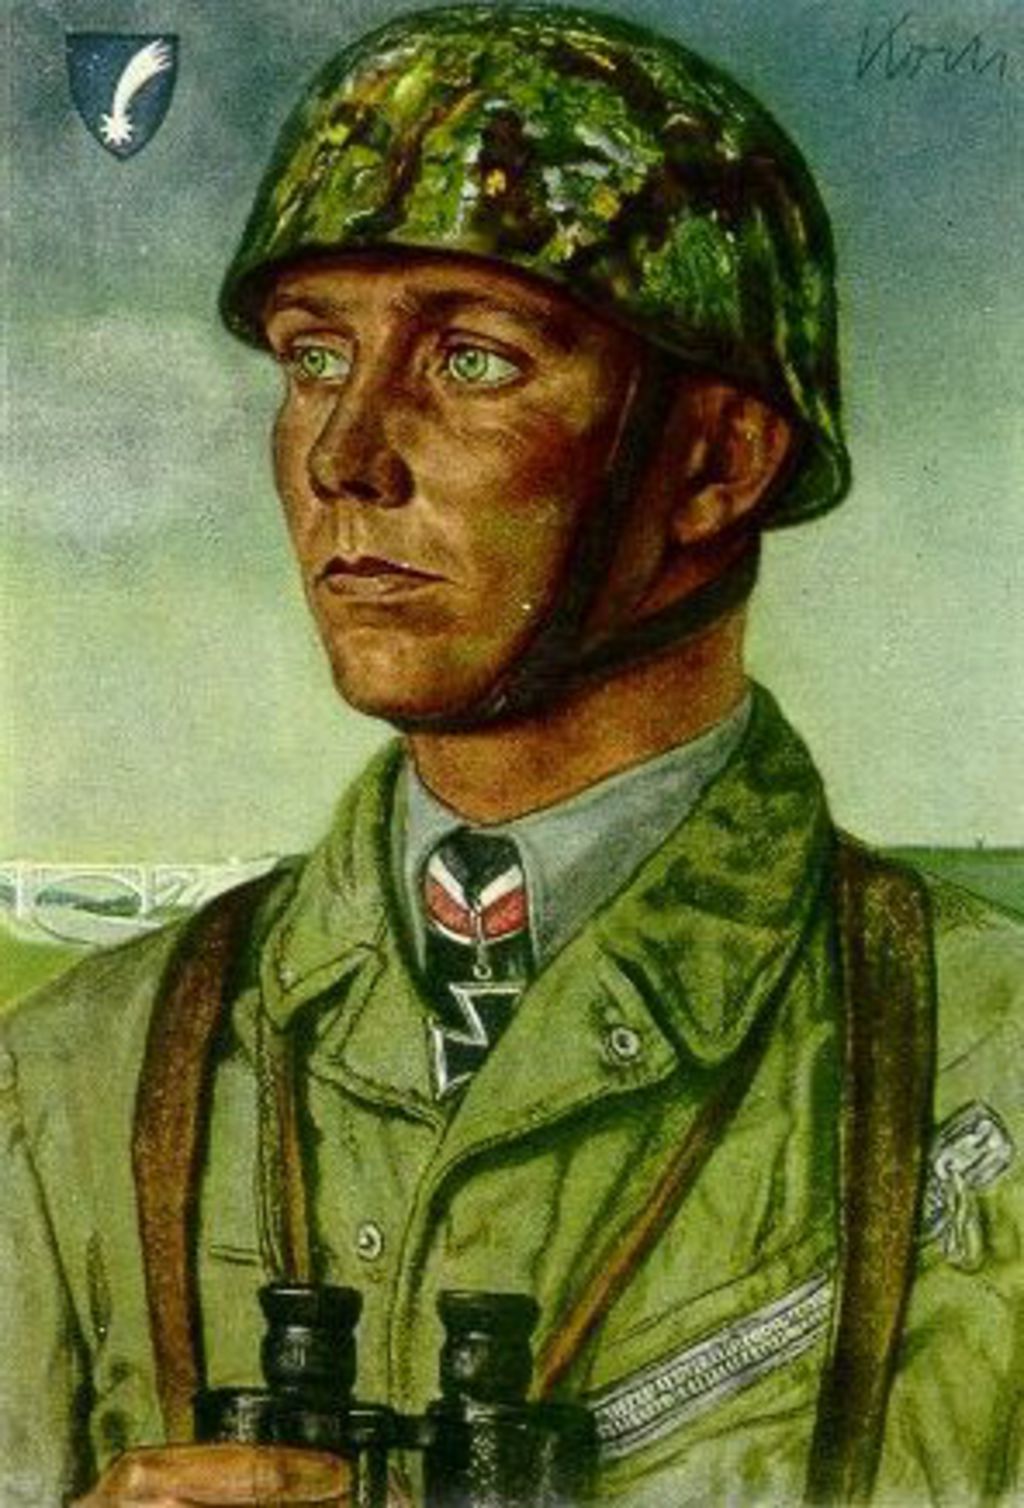 Exponat: Postkarte: Deutscher Fallschirmjäger, 1940